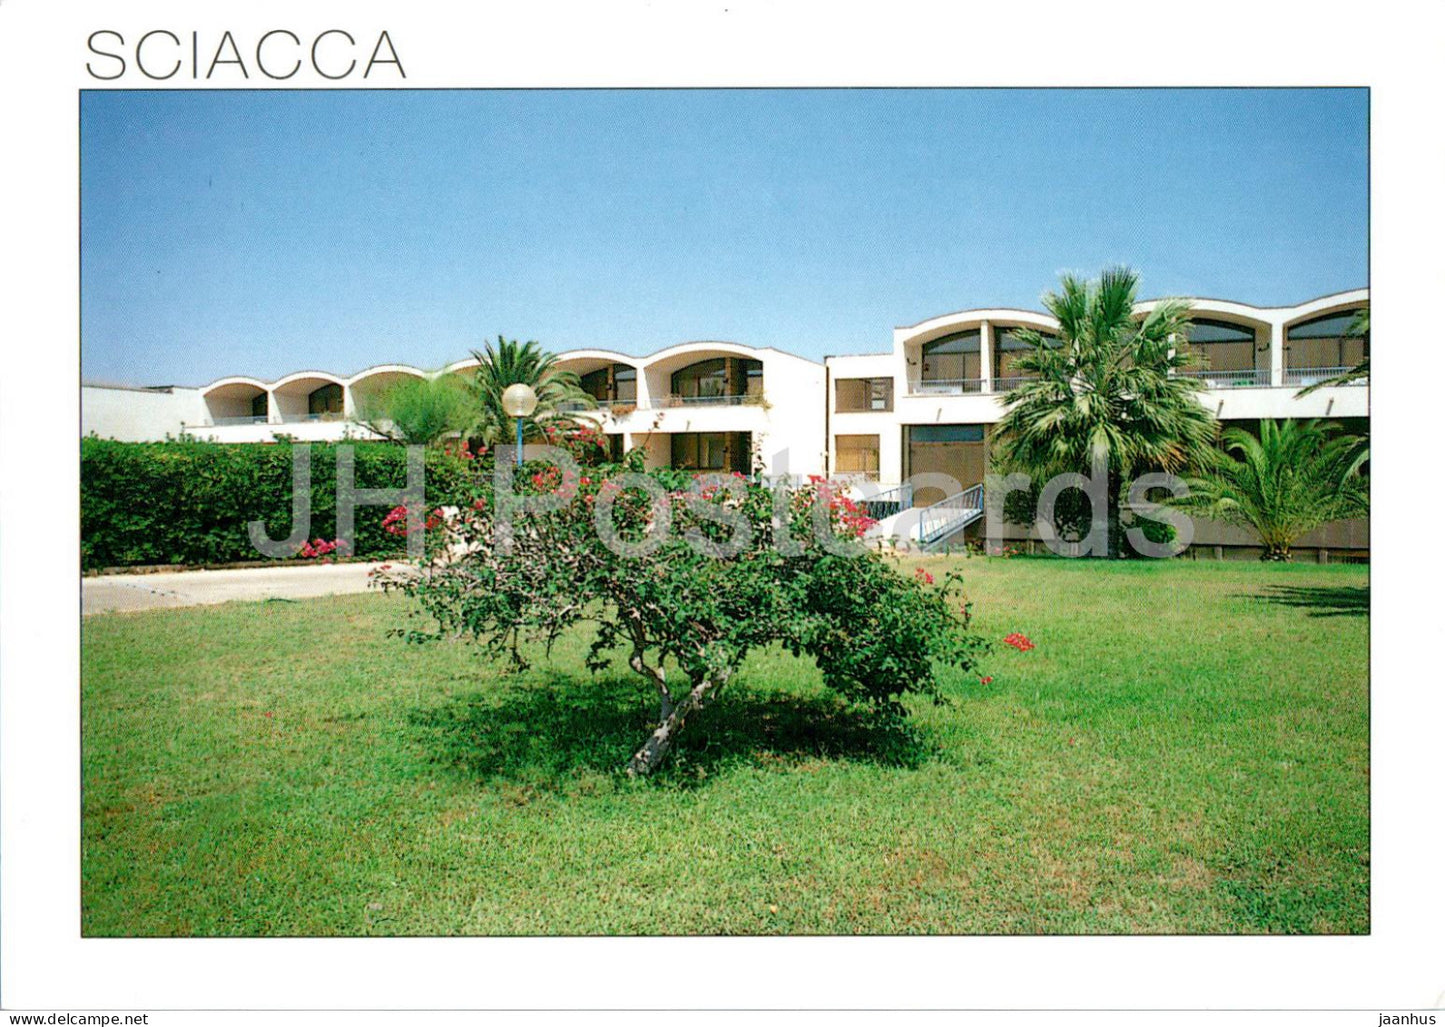 Sciacca - Sicilia - Hotel Alicudi - 53 - Italy - unused - JH Postcards